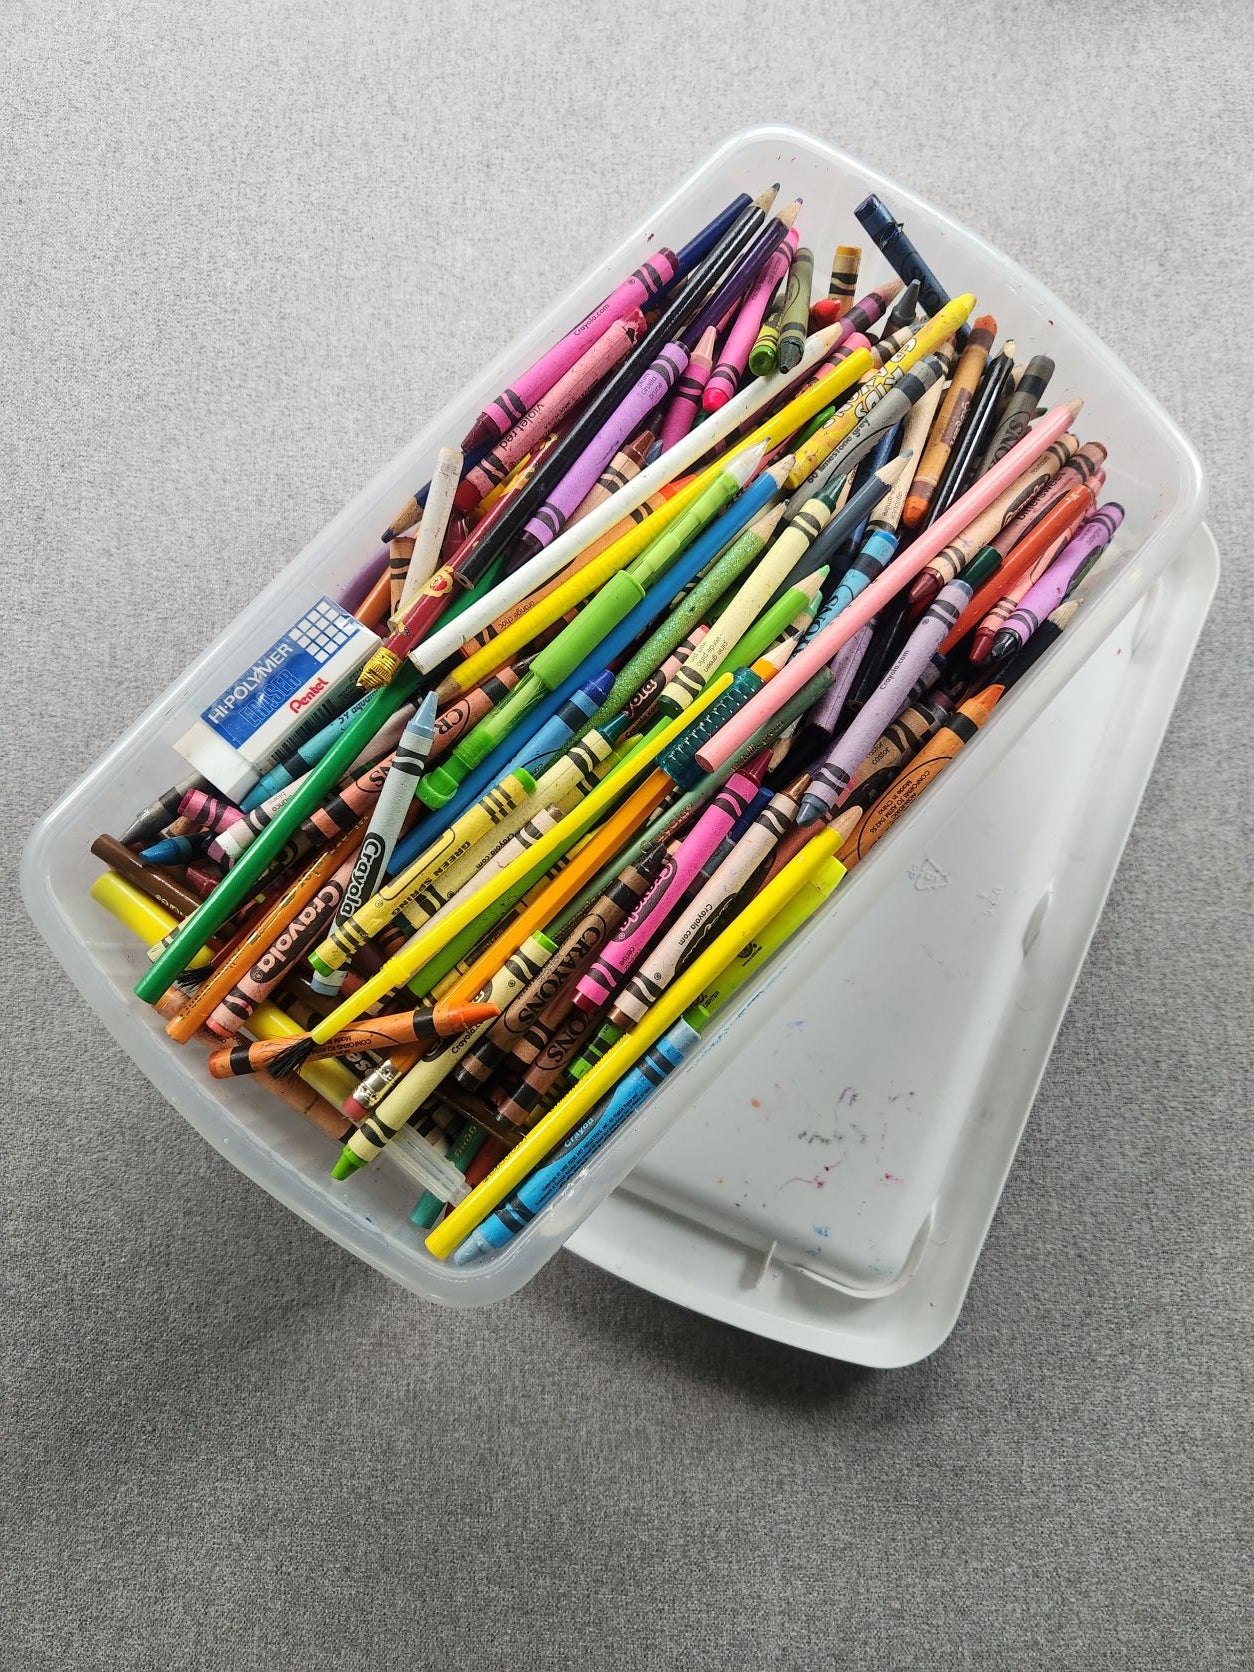 Organizing crayons  Crayon organization, Crayon storage, Playroom